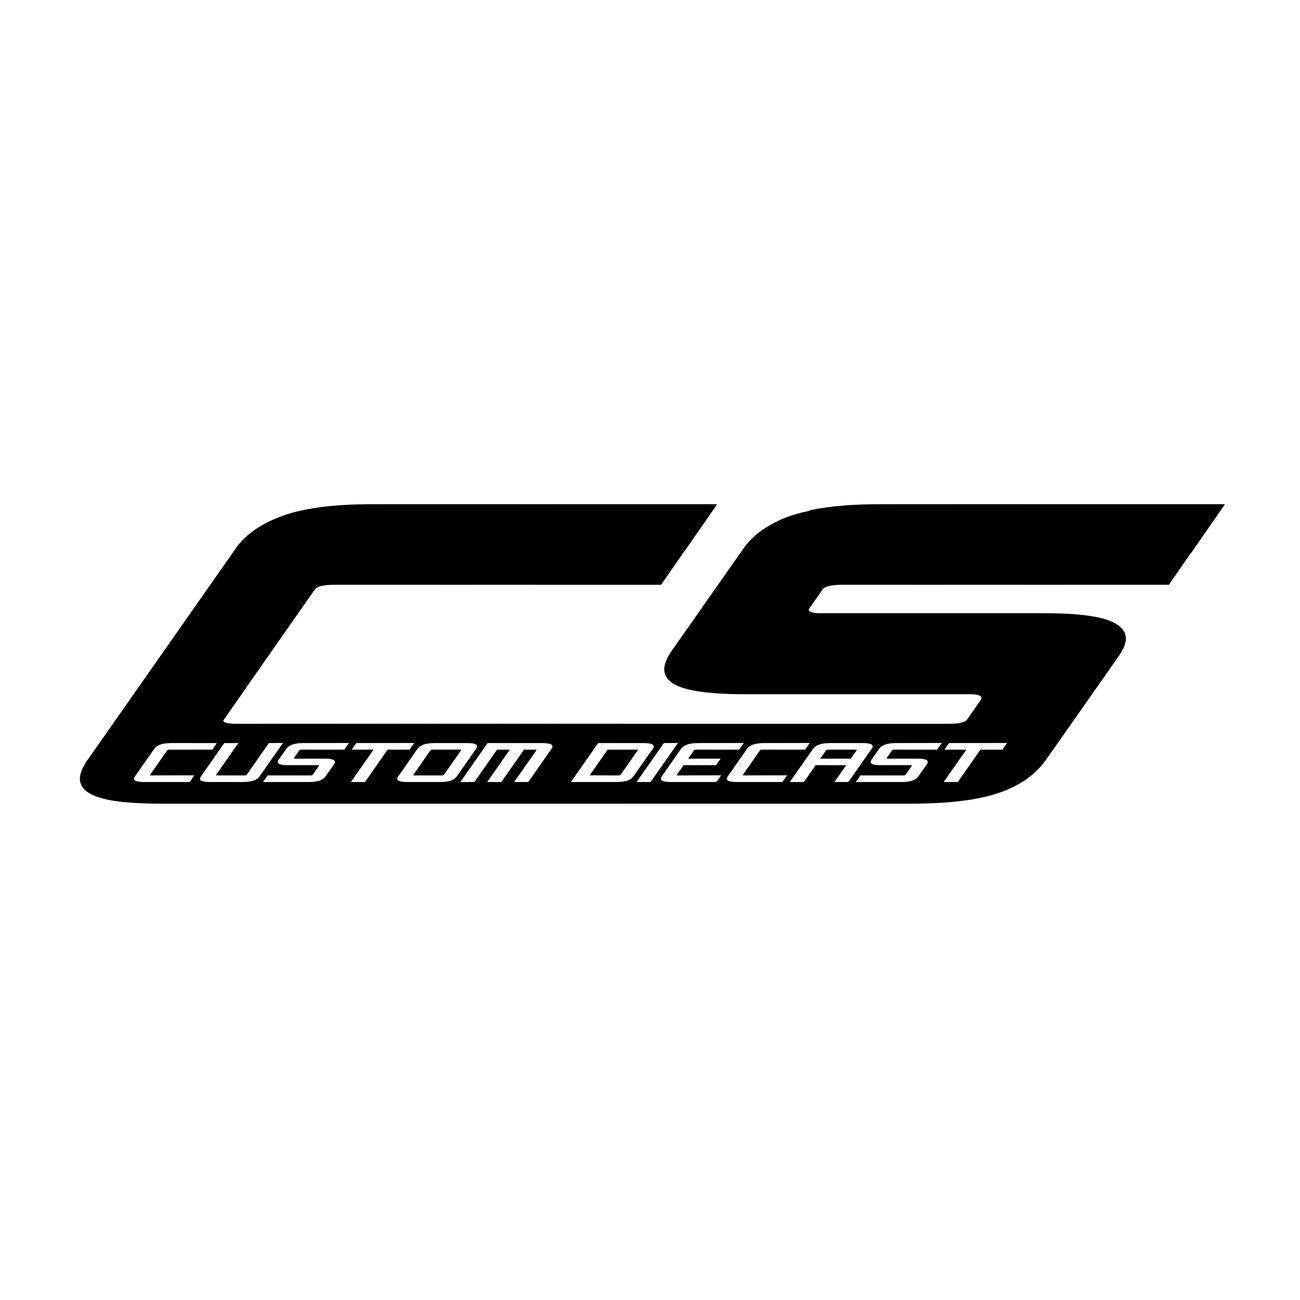 CS Custom Diecast